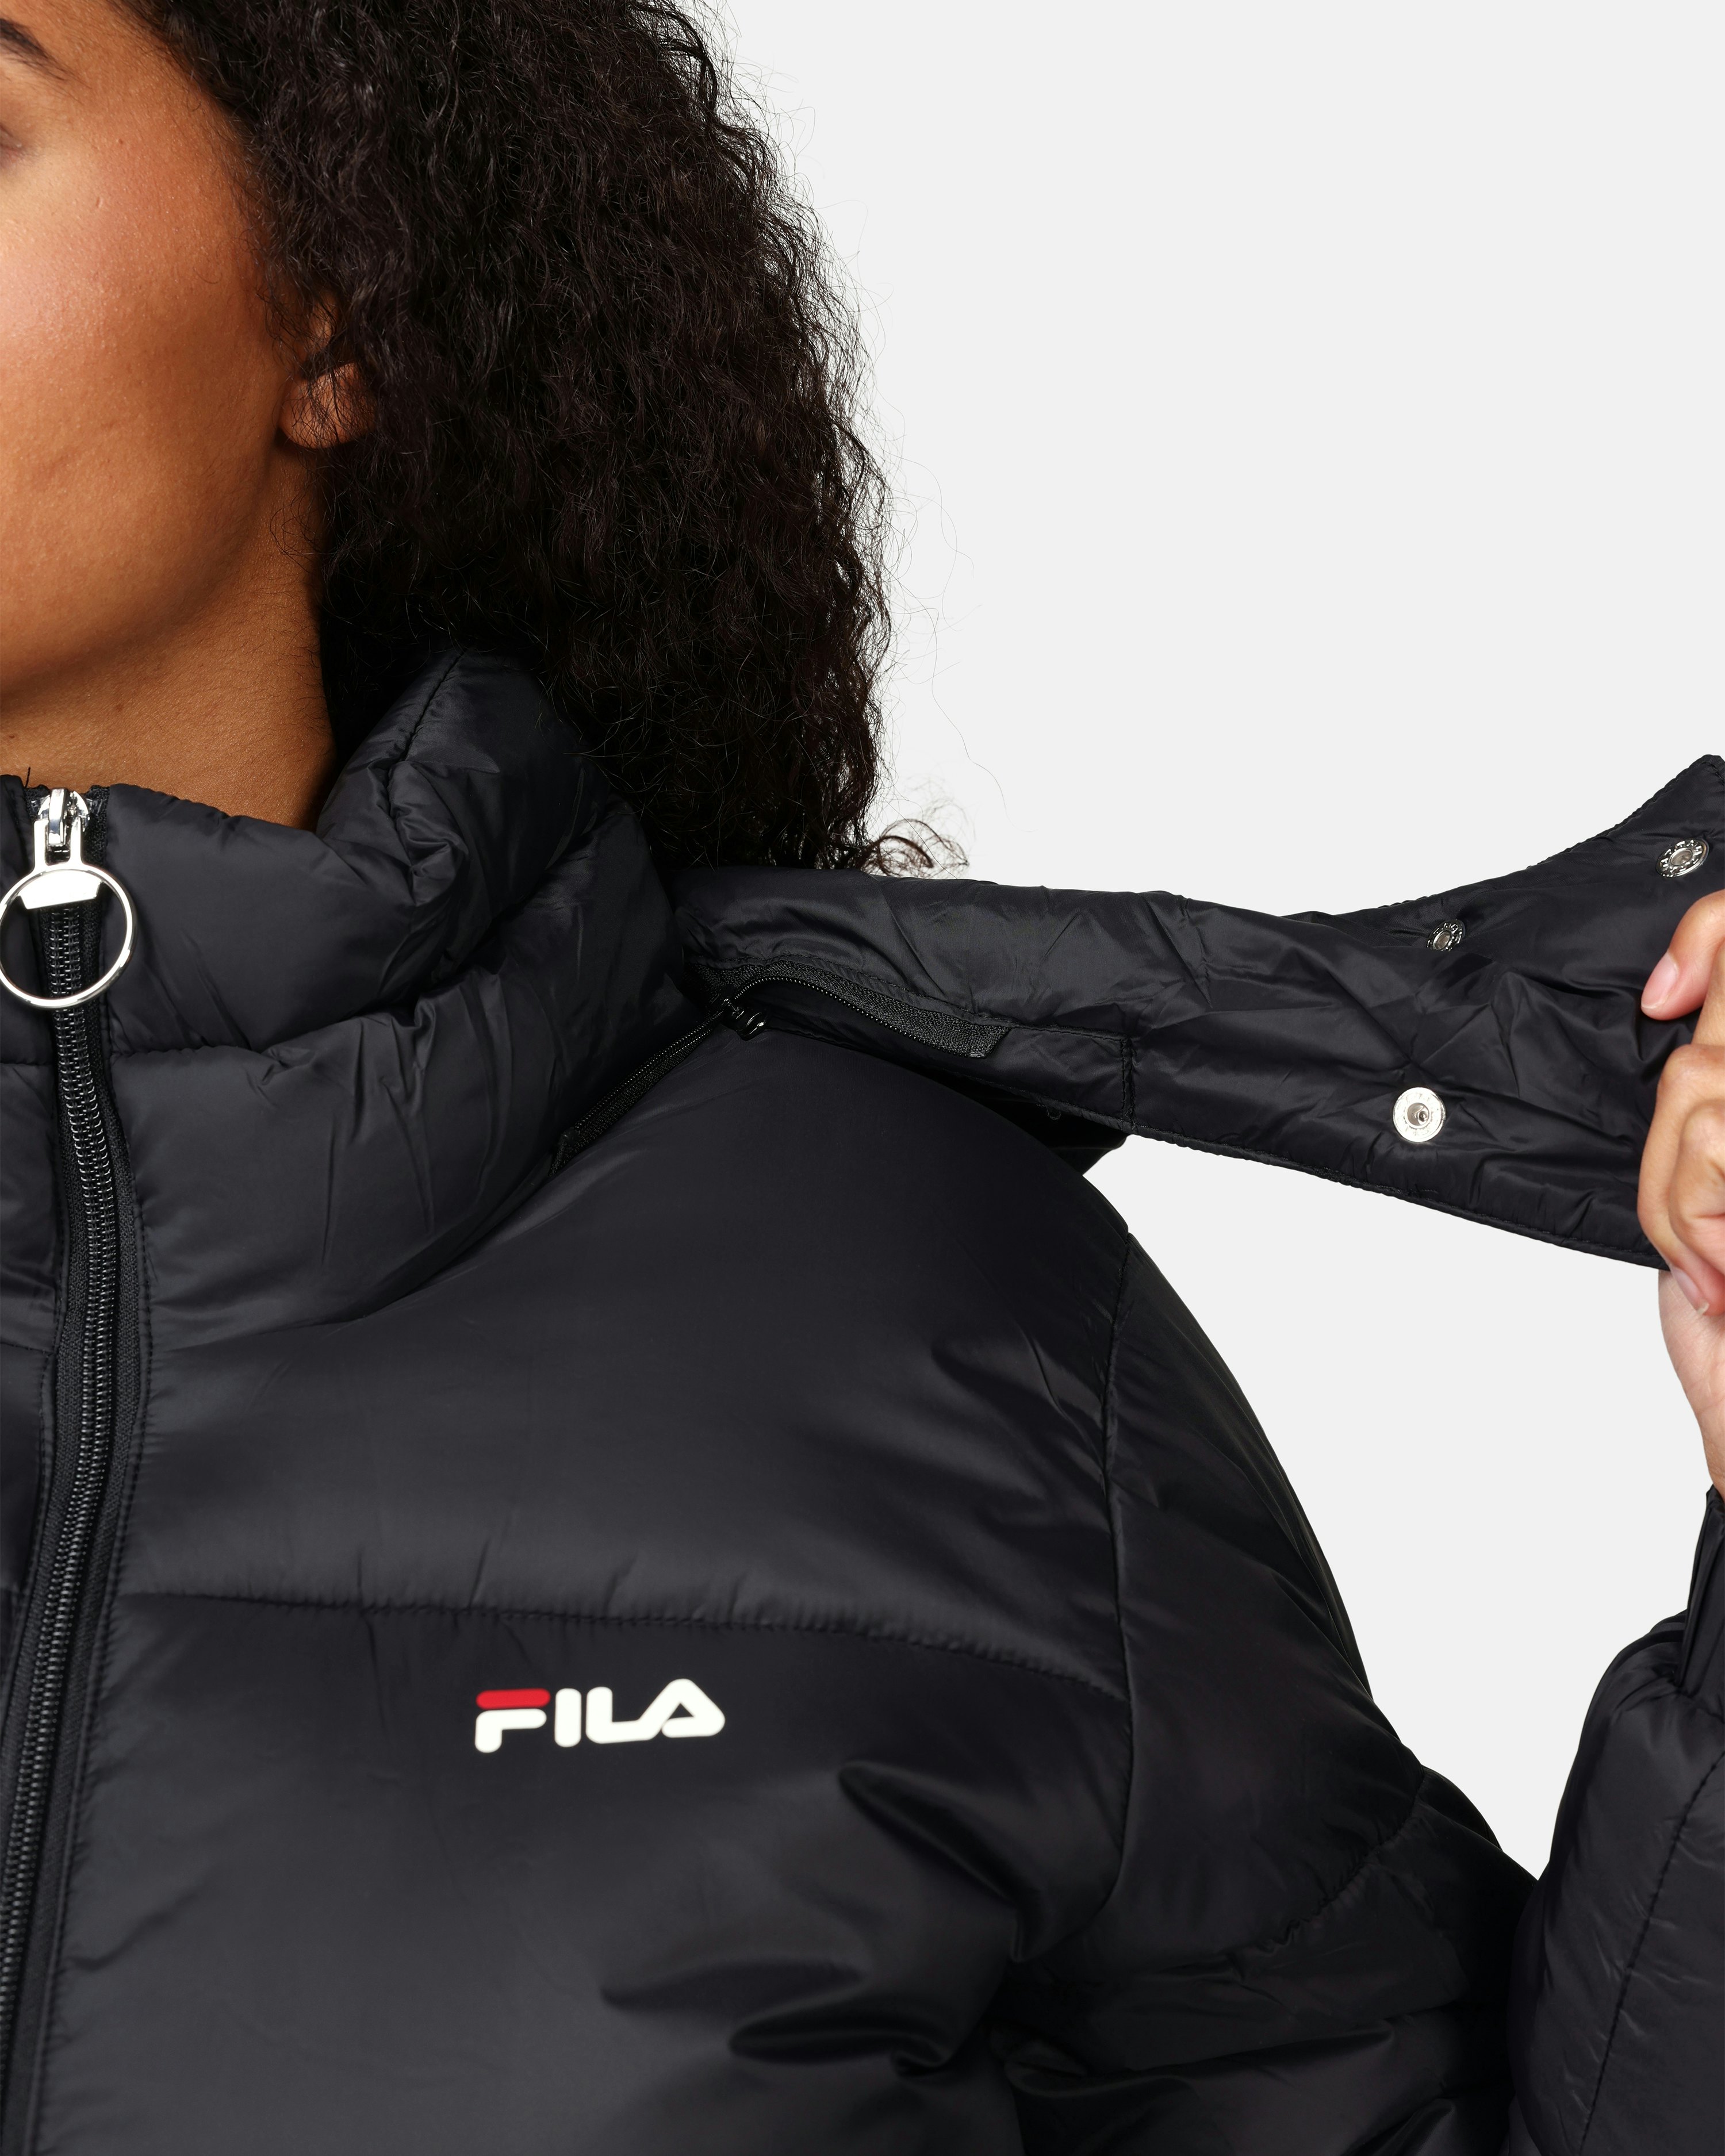 Intermediate Ung Kapel FILA Jacket - Bender Cropped Black | Women | Junkyard